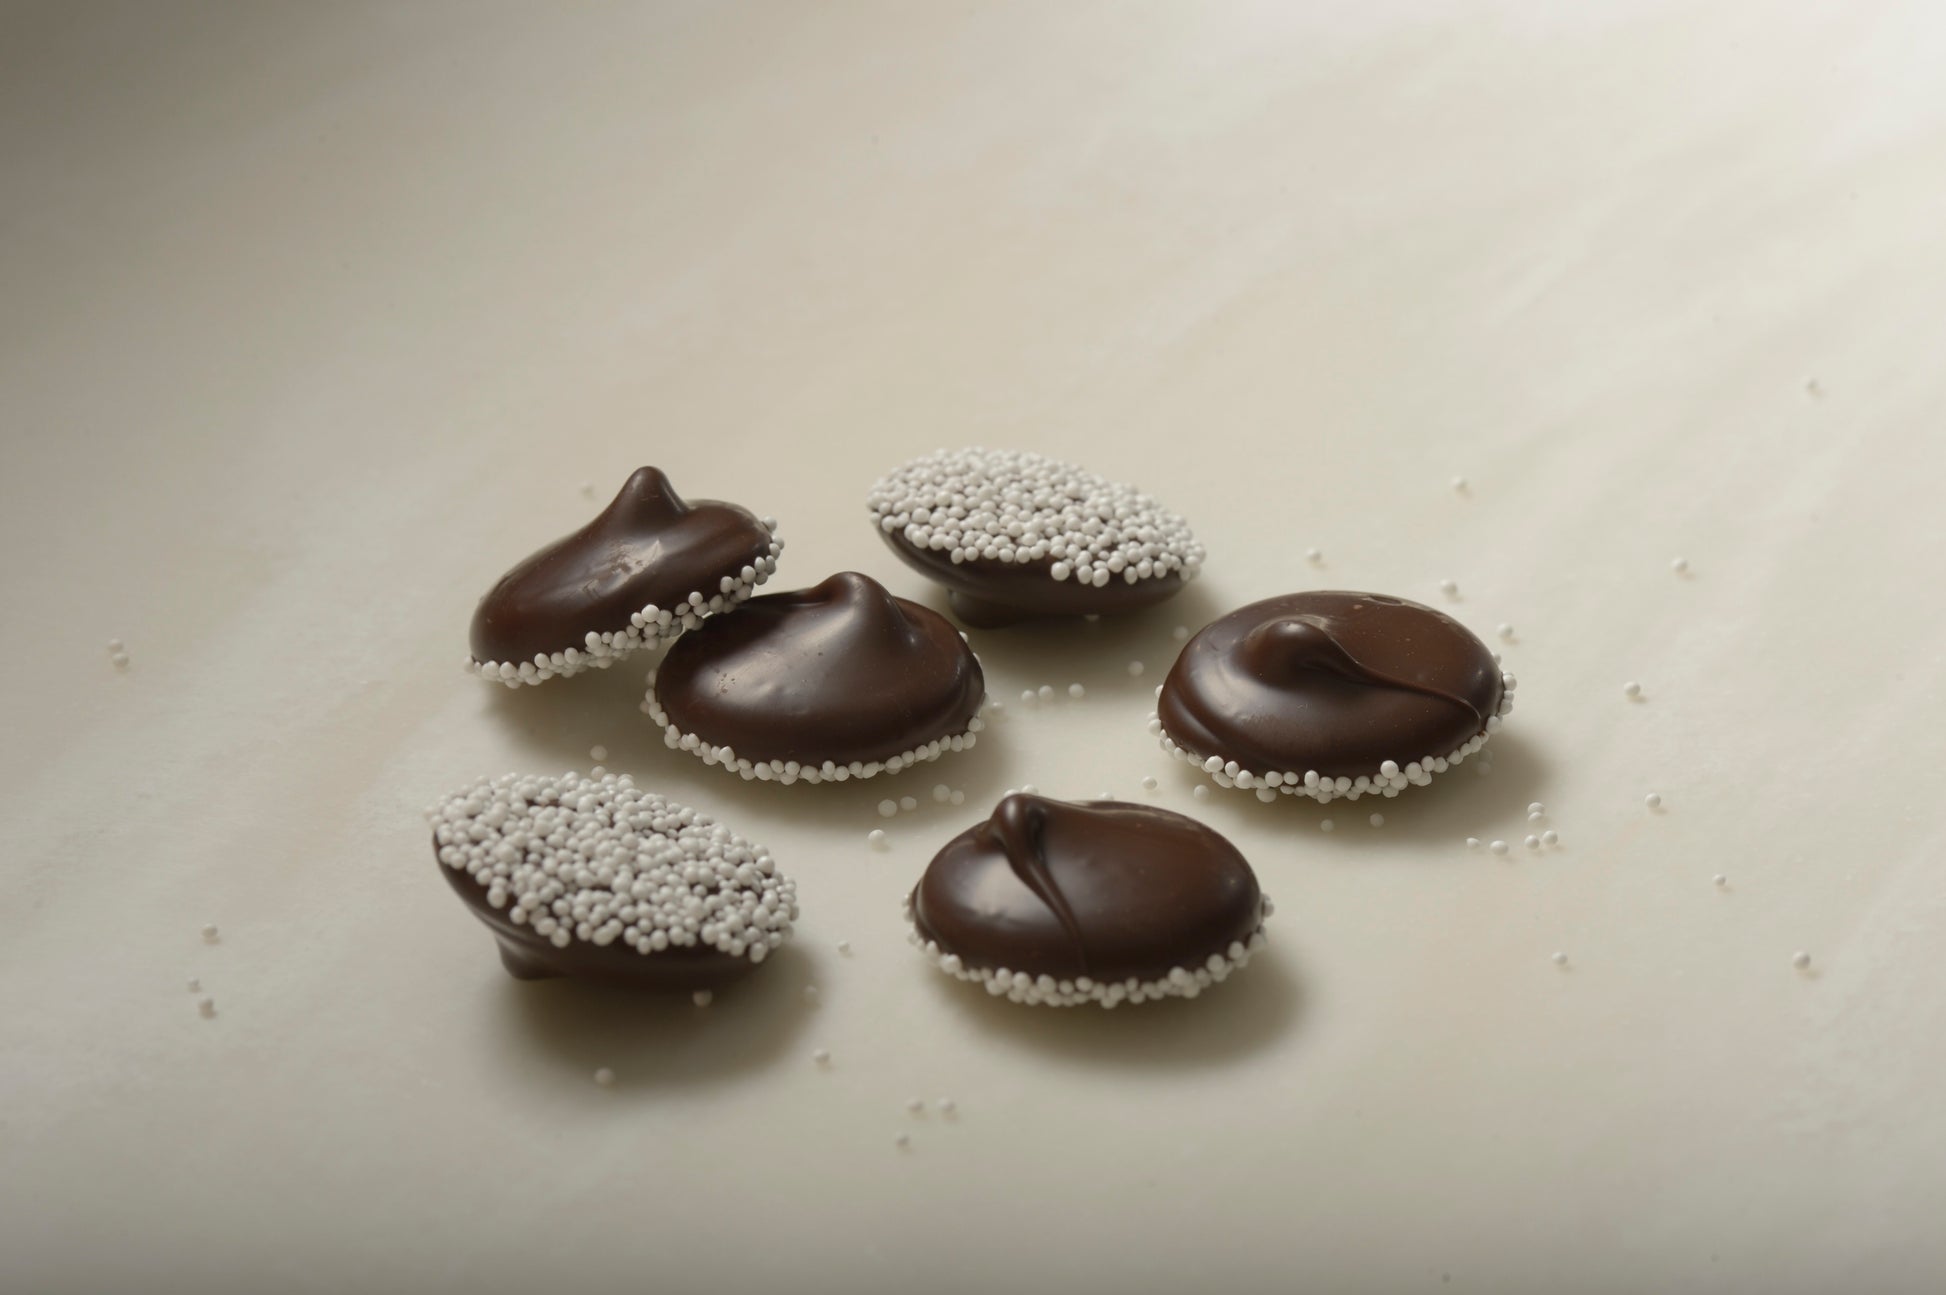 Handmade Dark Chocolate Nonpareils with White Seeds - Gourmet Chocolate Treats